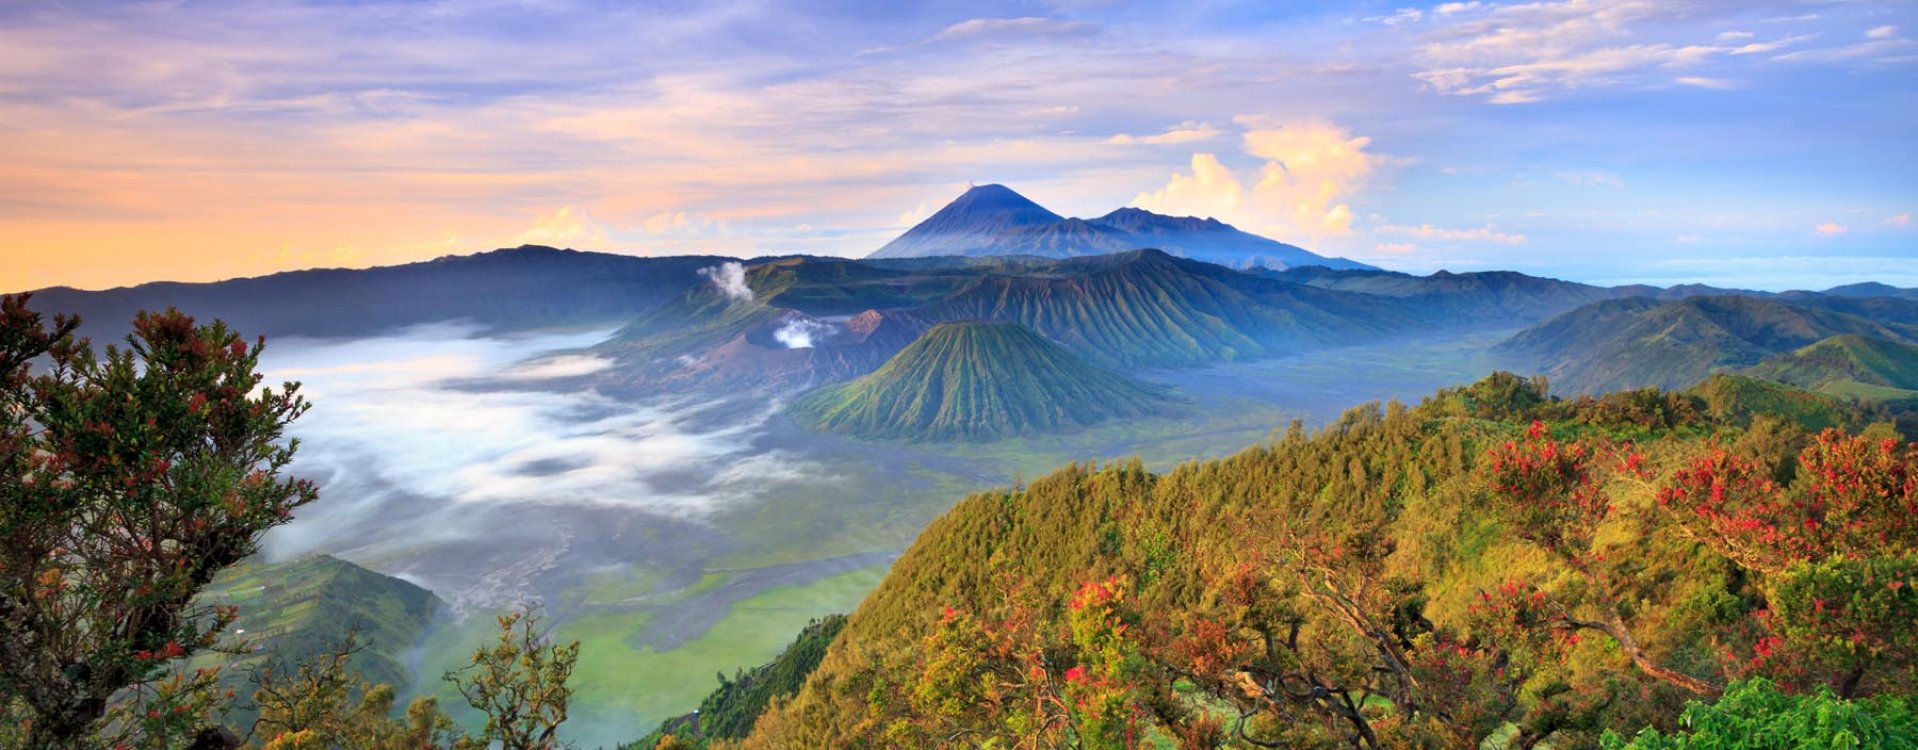 Bromo vulkaan, Java